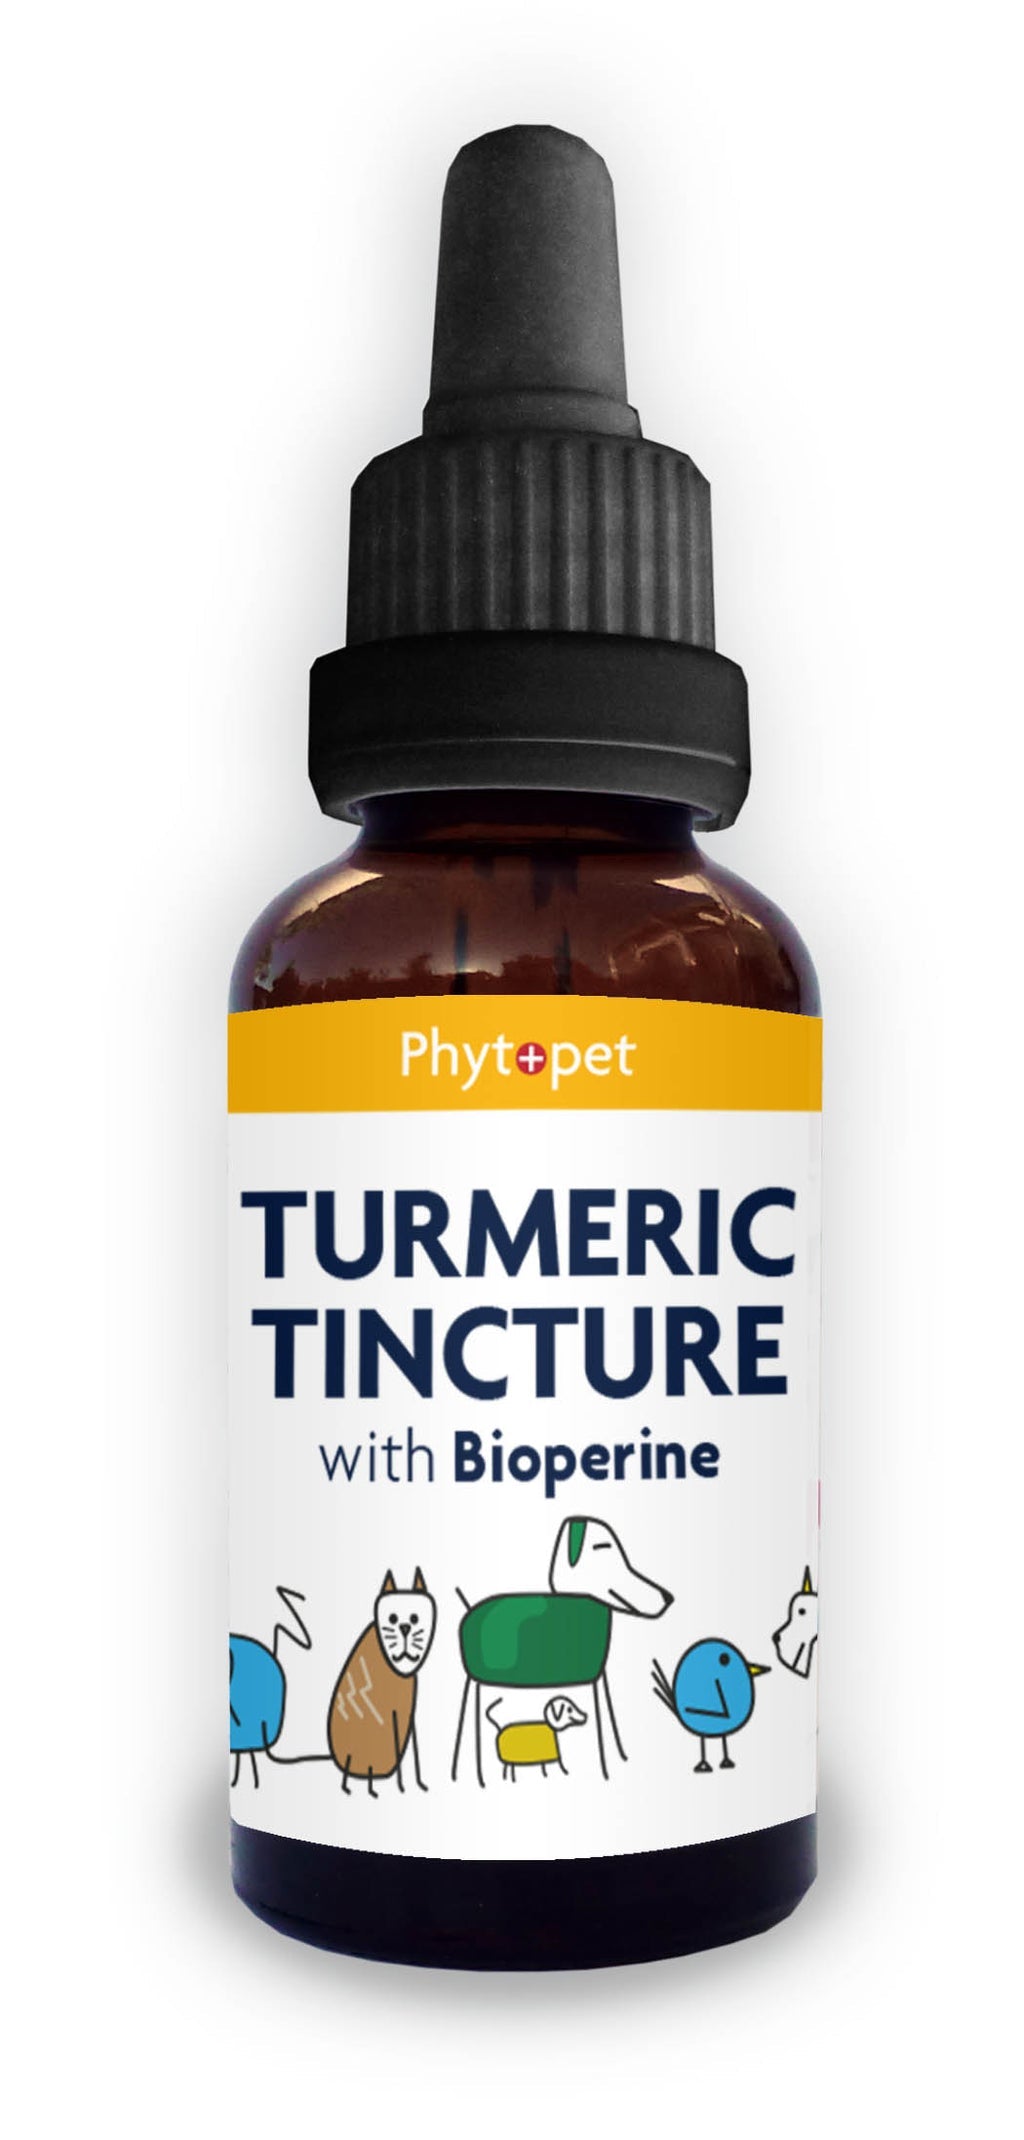 Phytpet Turmeric Tincture with Bioperine100ml